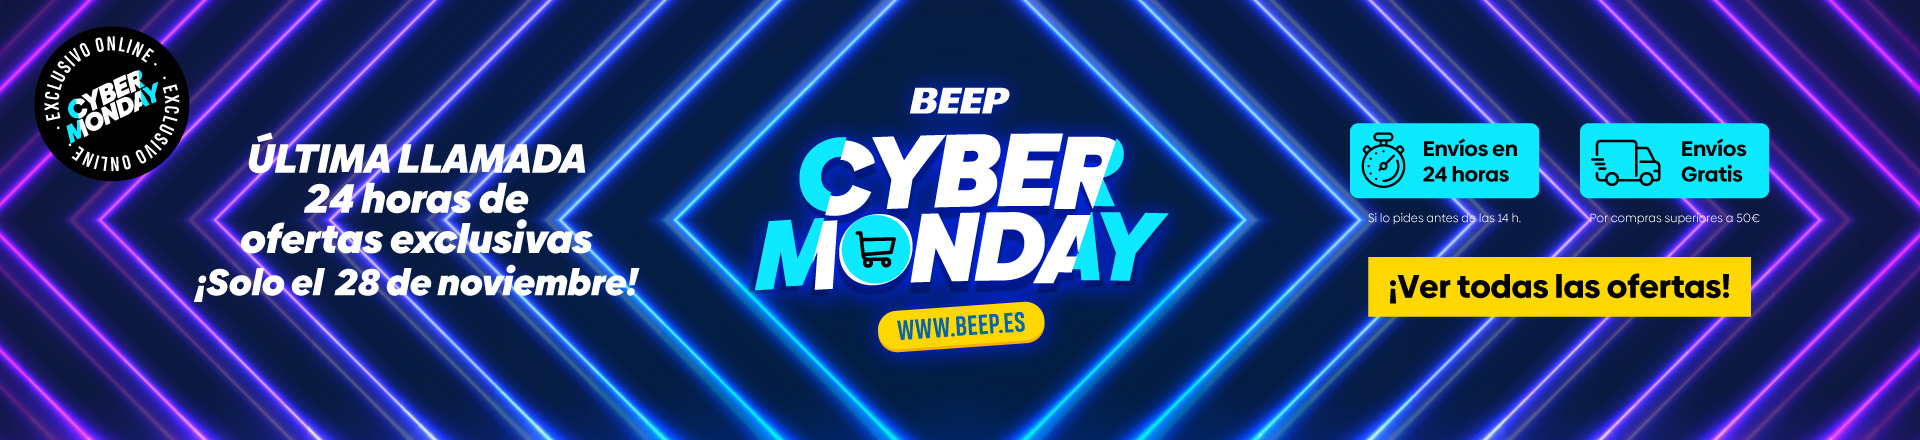 Ofertas Cyber Monday Beep